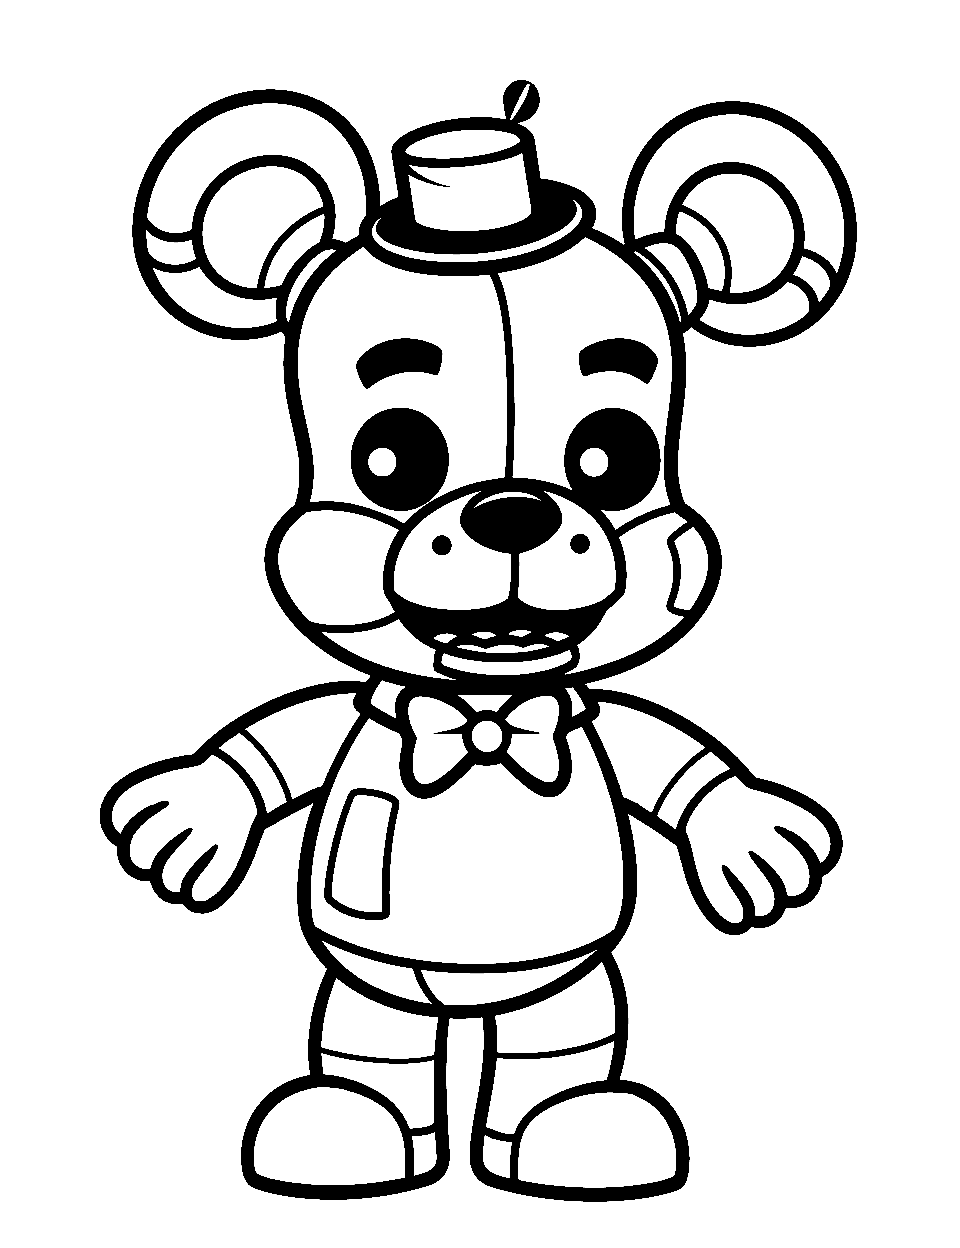 Cutesy Toy Freddy Coloring Page - Toy Freddy in a cute pose.